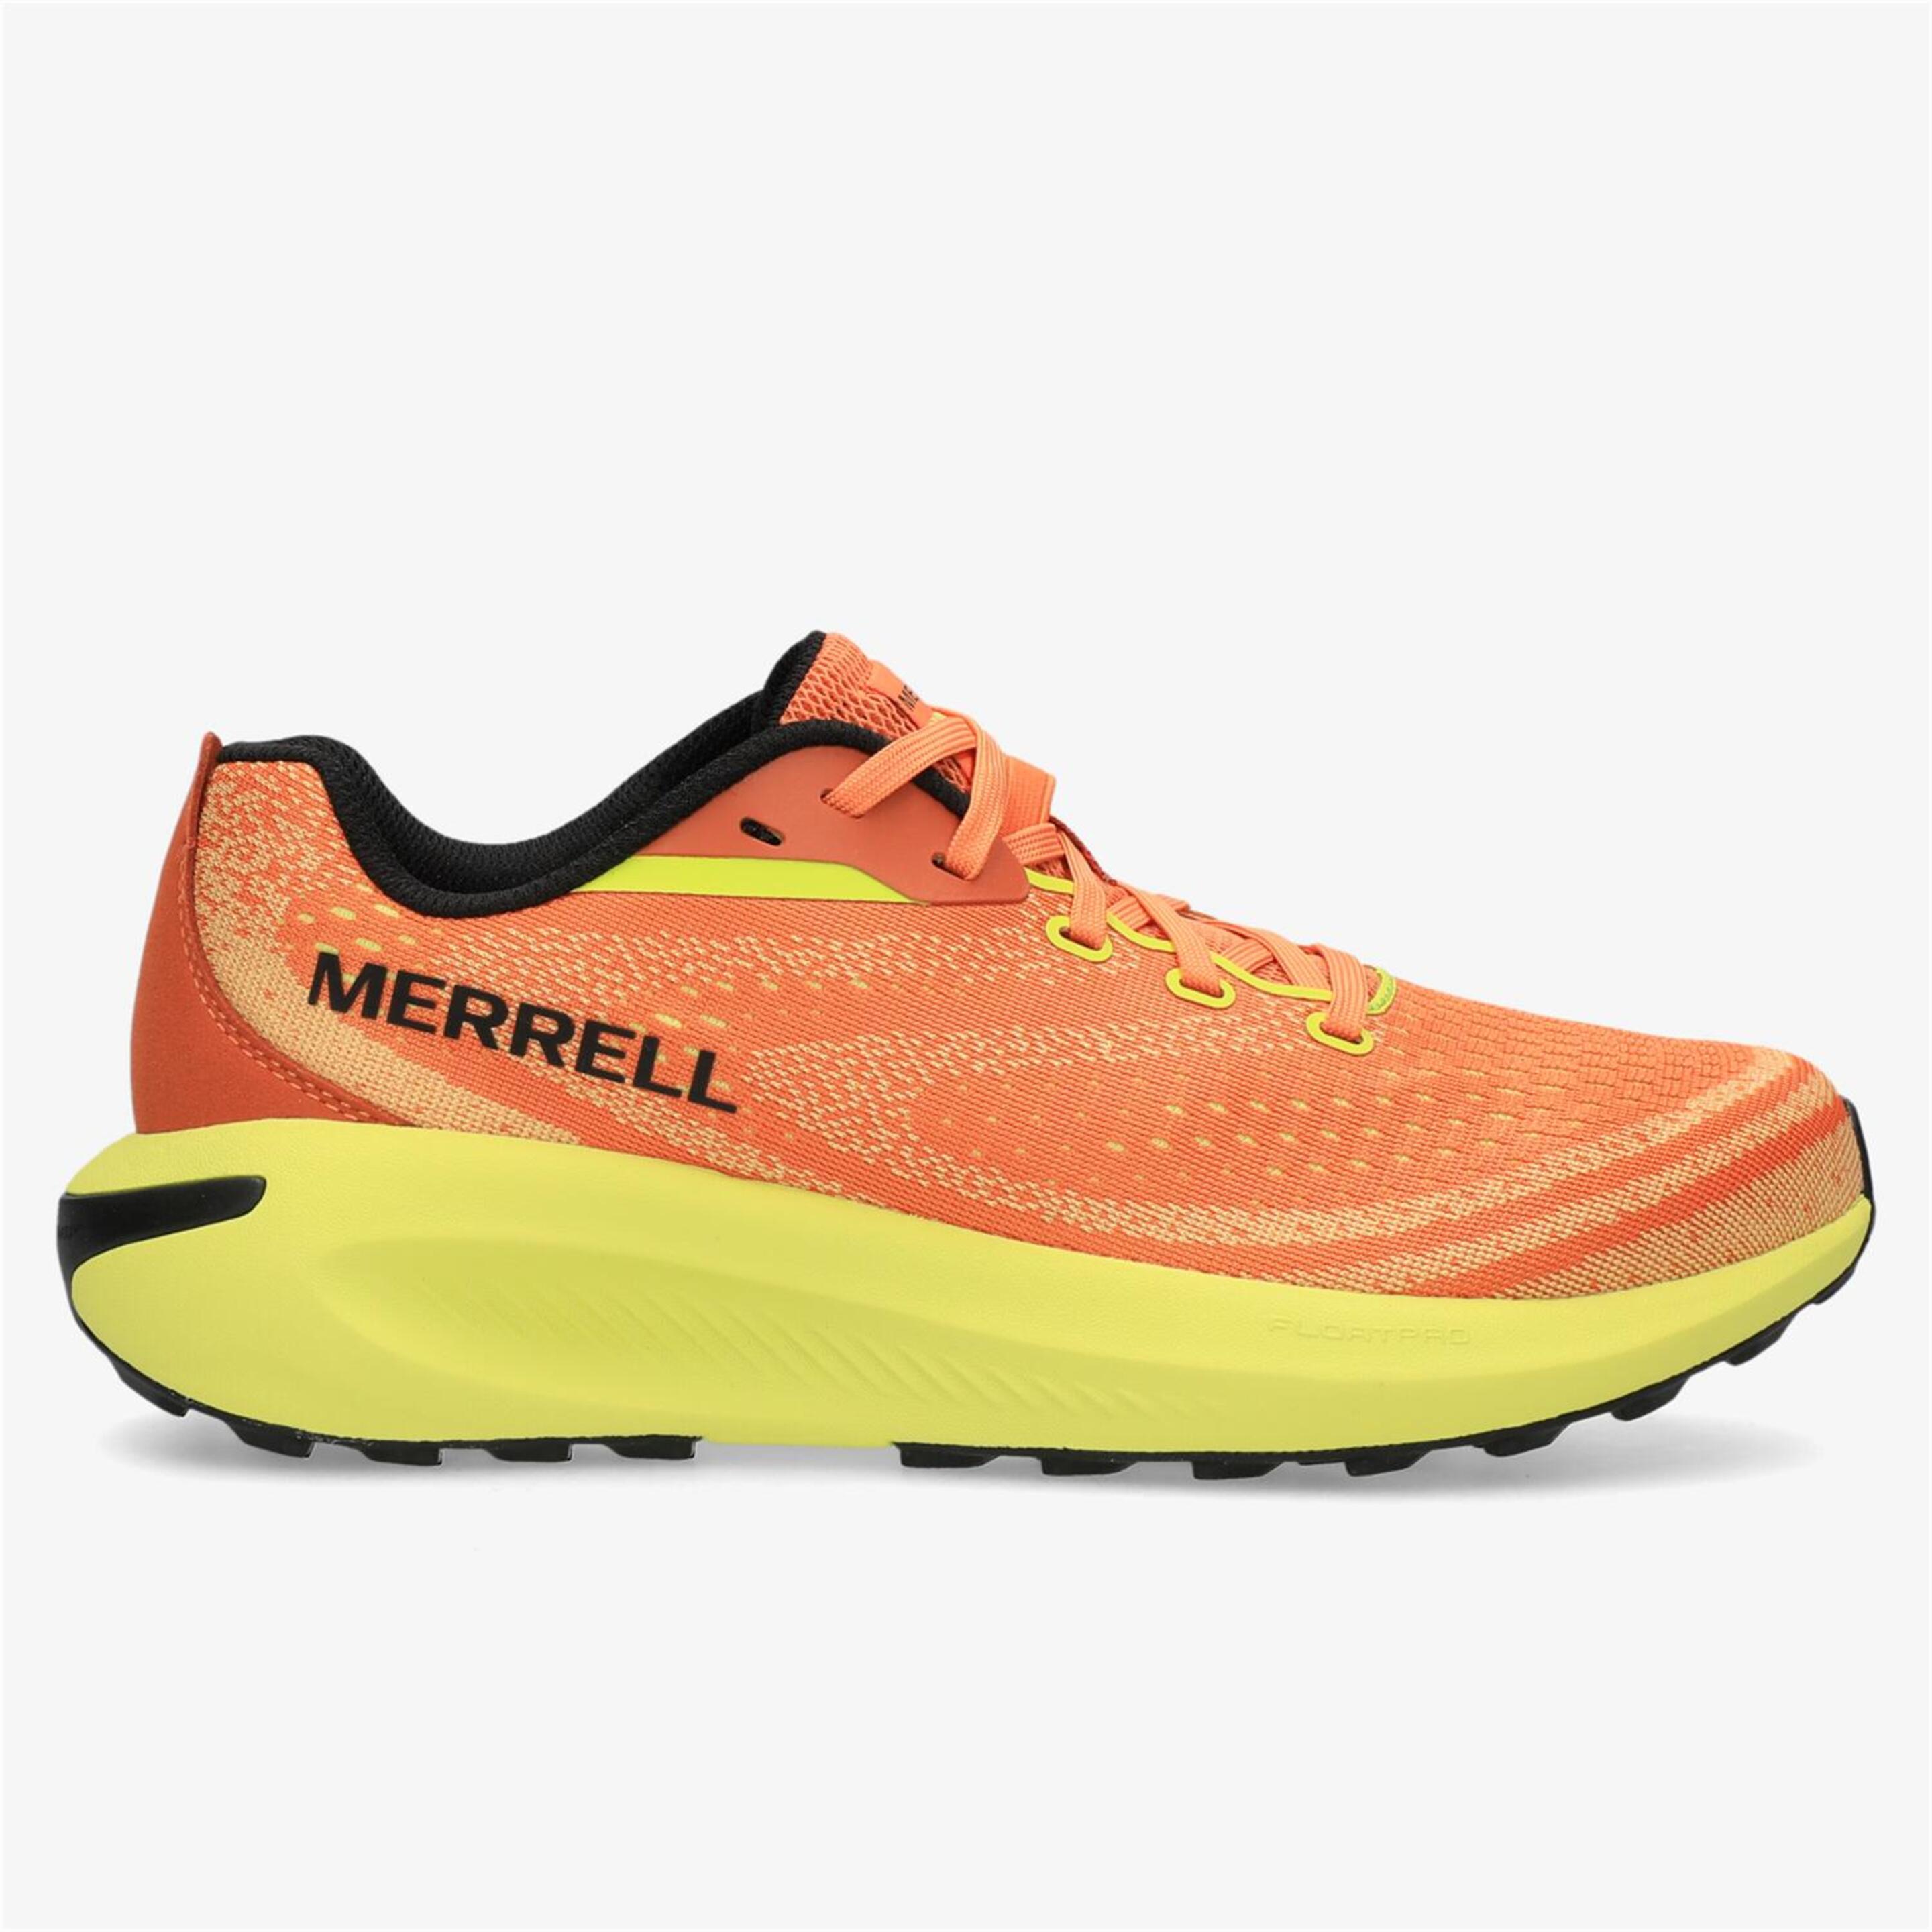 Merrell Morphlite - naranja - Sapatilhas Trail Homem